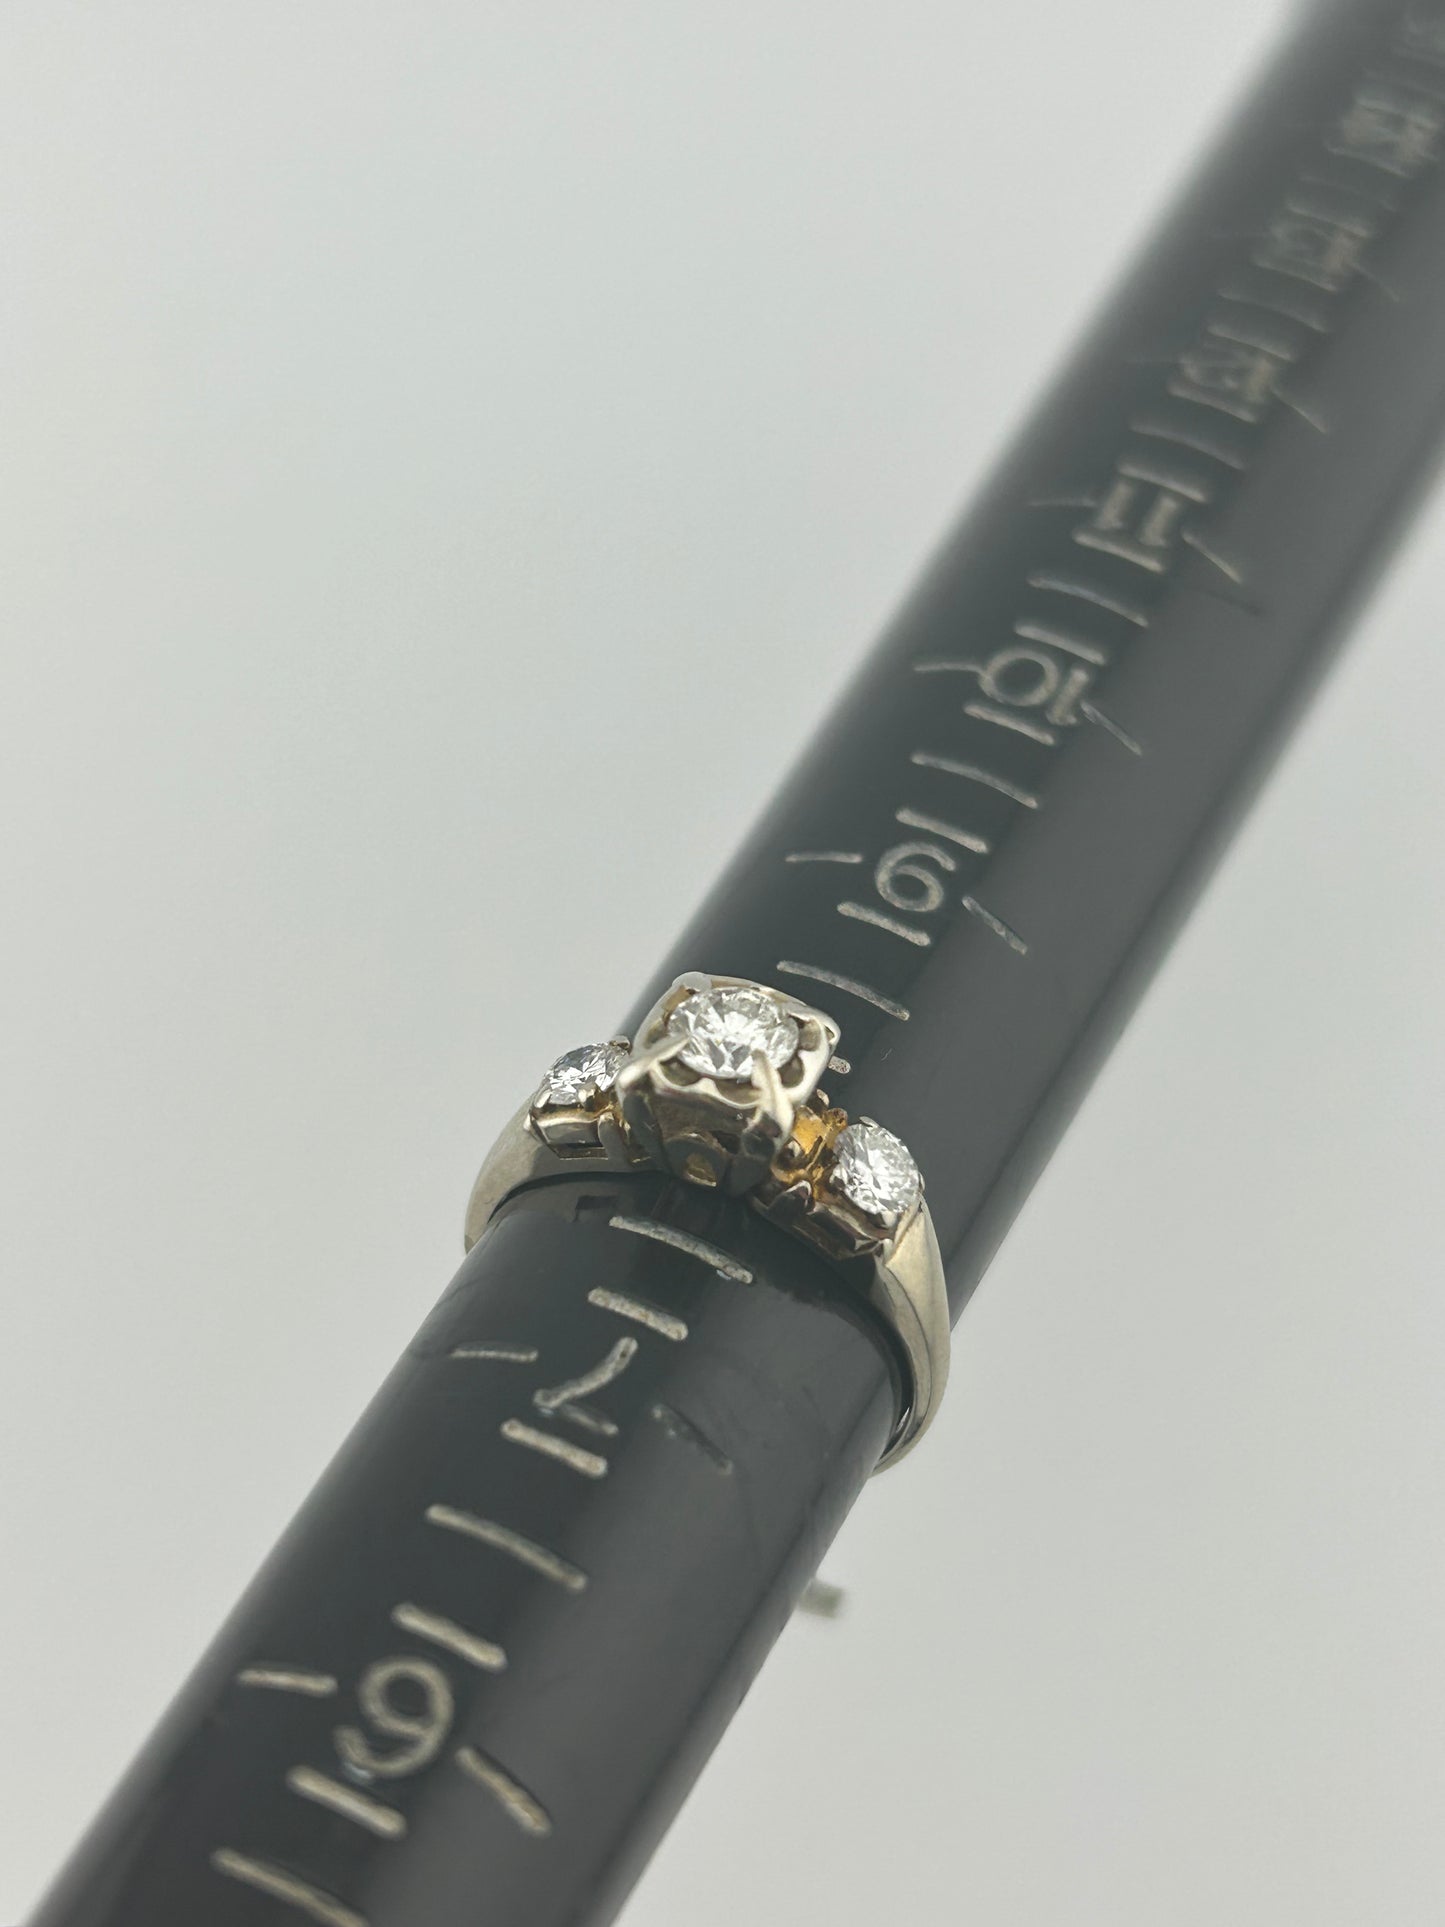 Vintage Ladies Three Diamond Engagement Ring